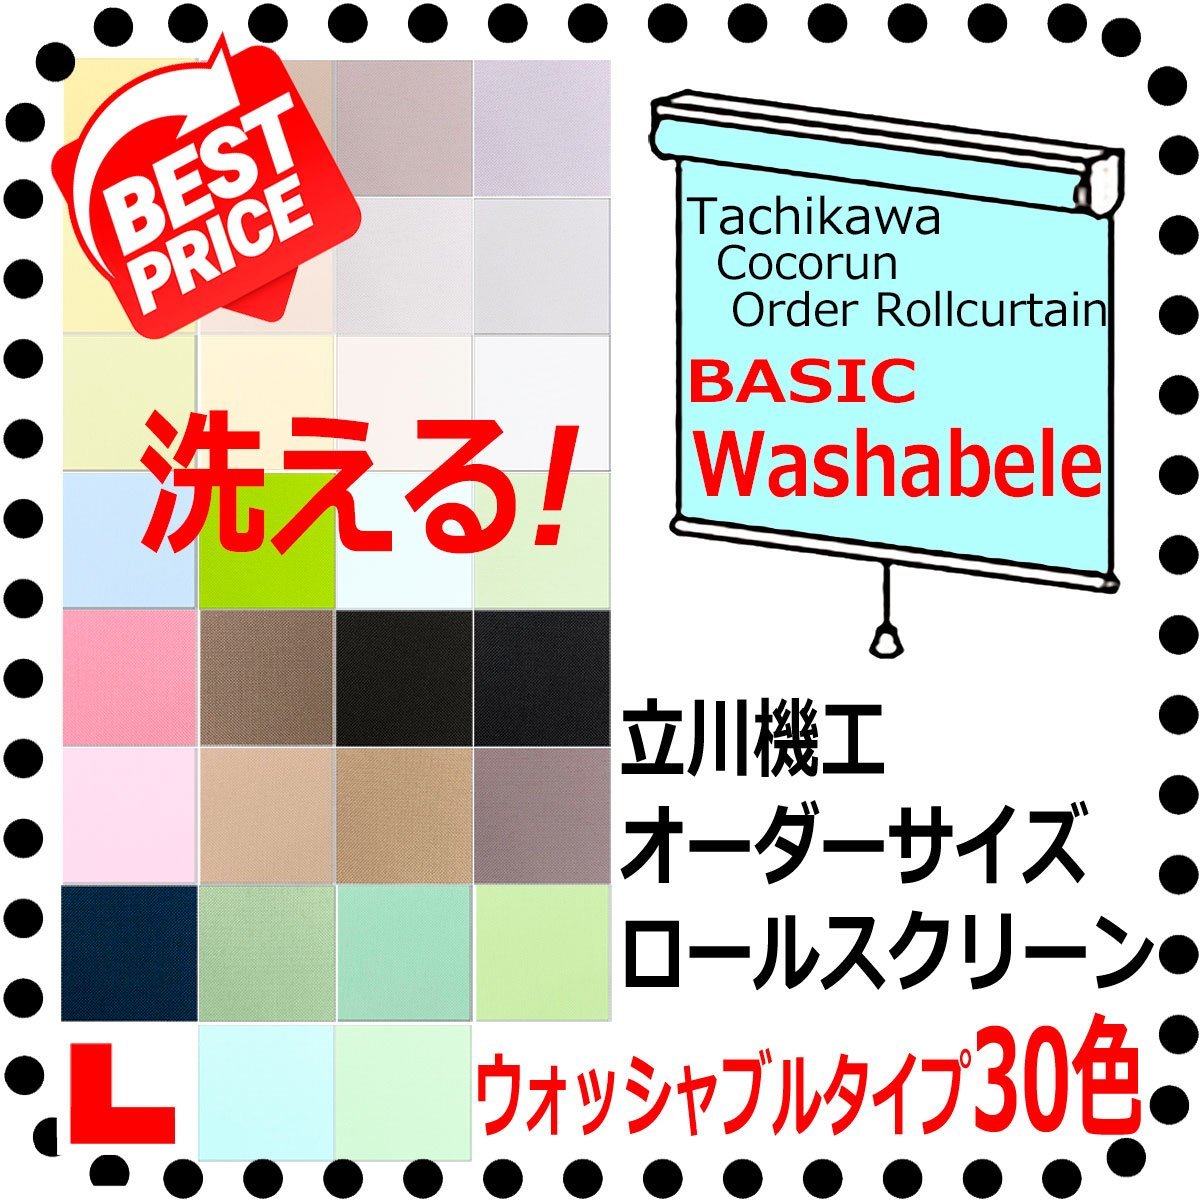  Tachikawa заказ roll занавески здесь runBASIC... омыватель bru модель ширина [136~180cm]X высота [181~200cm]